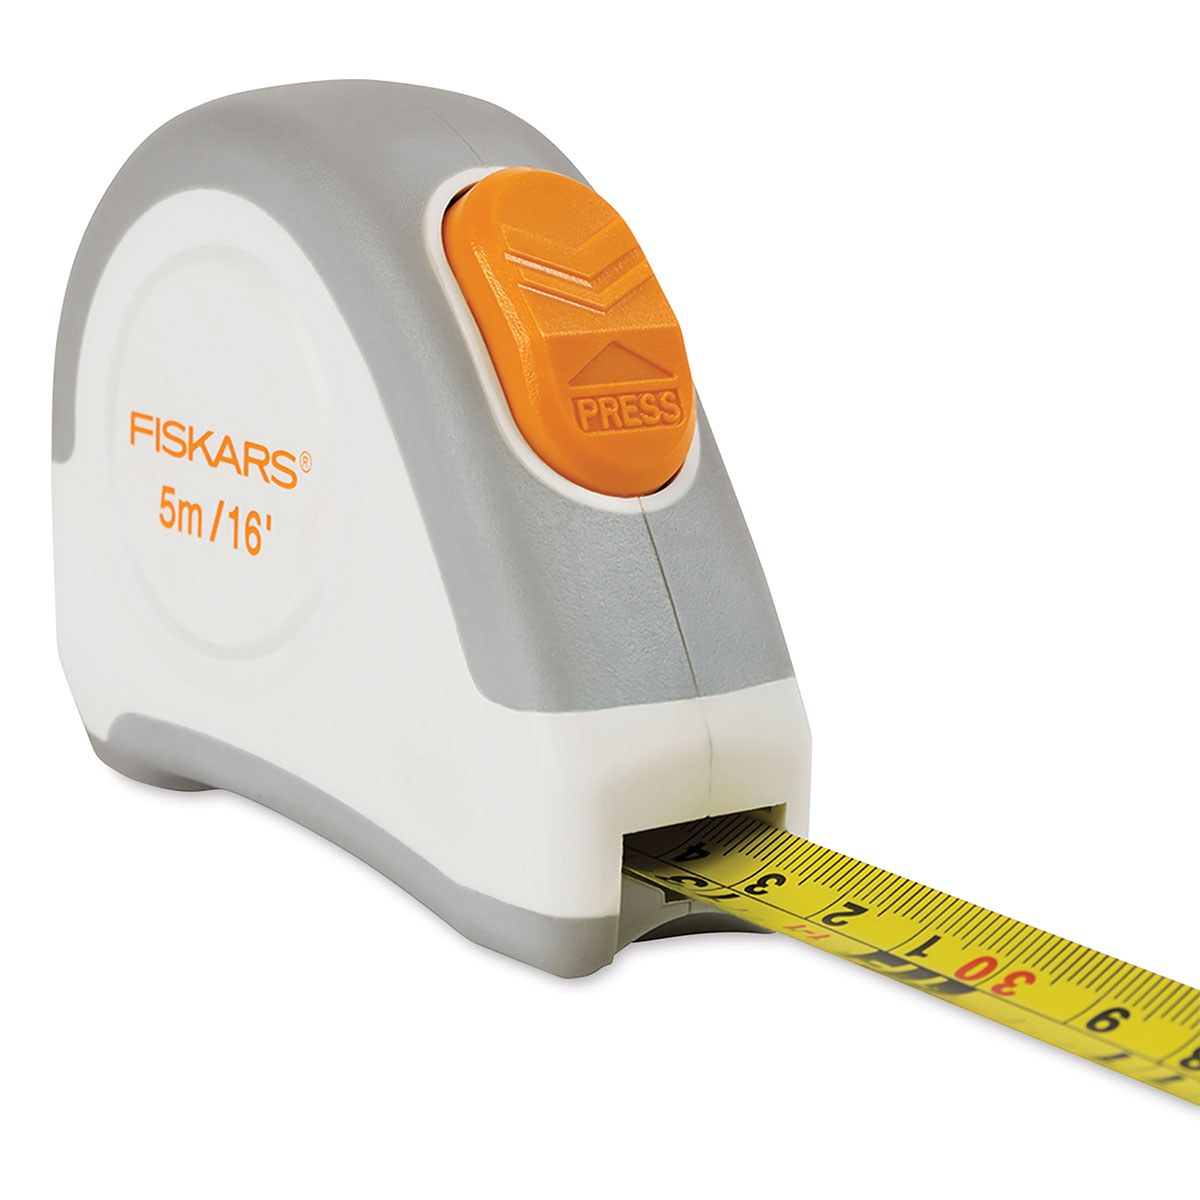 Image of Fiskars measuring tape